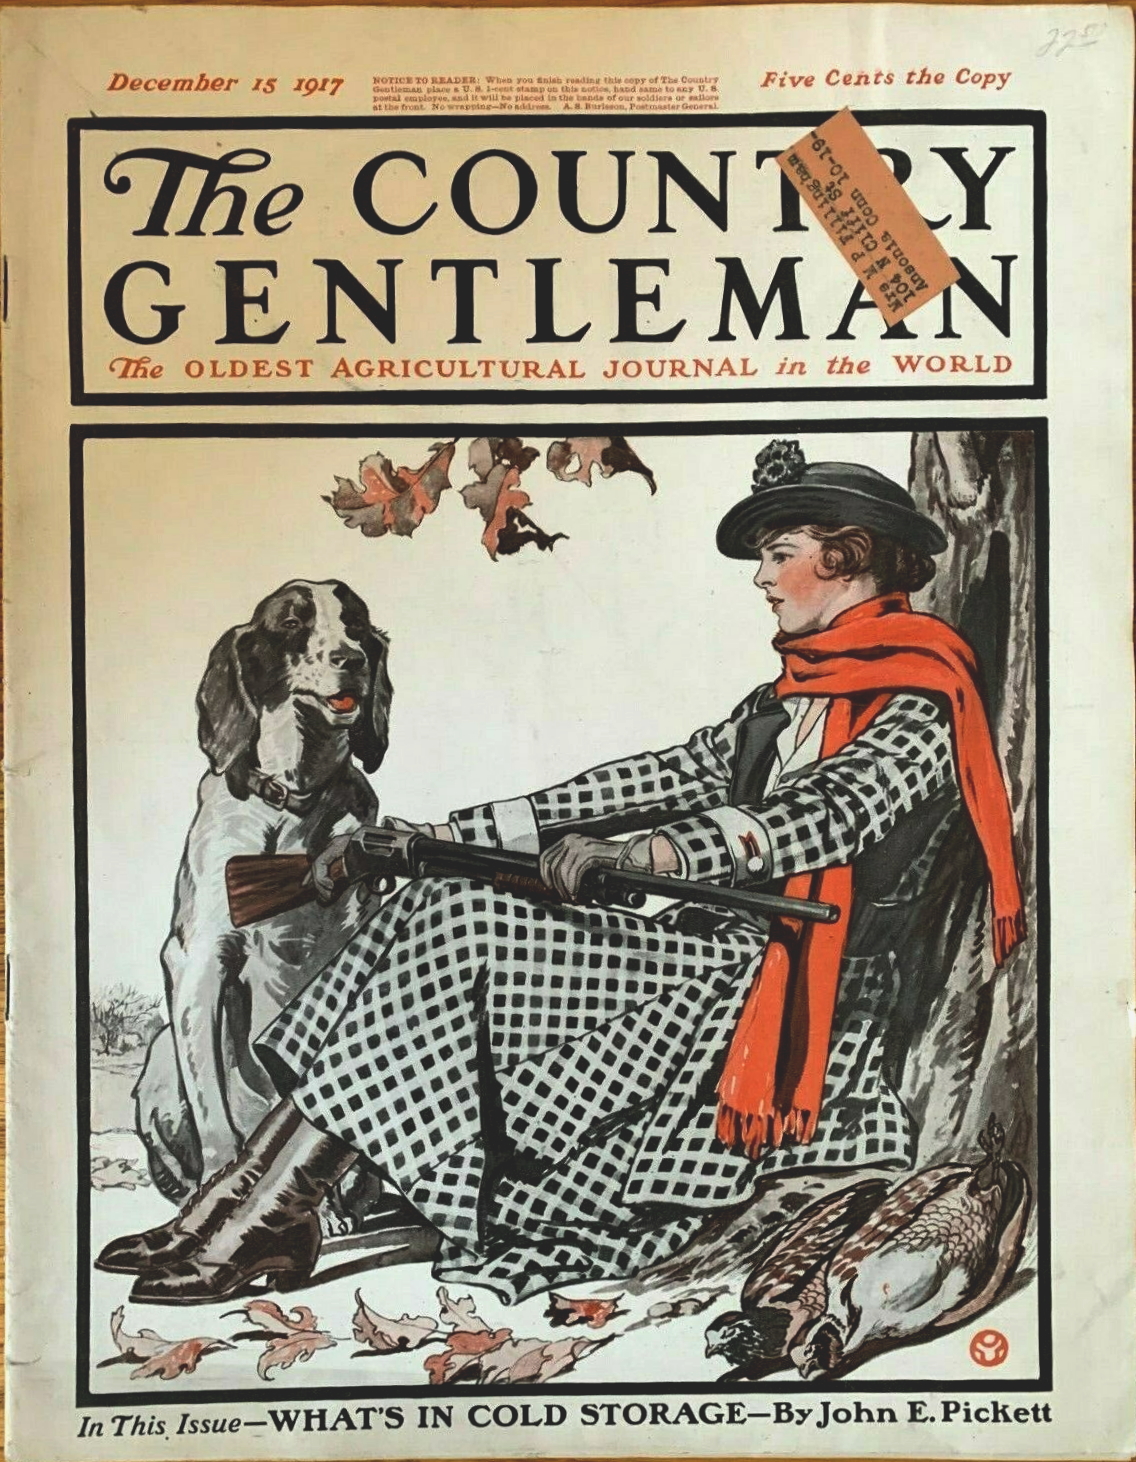 The Country Gentleman - December 15 1917